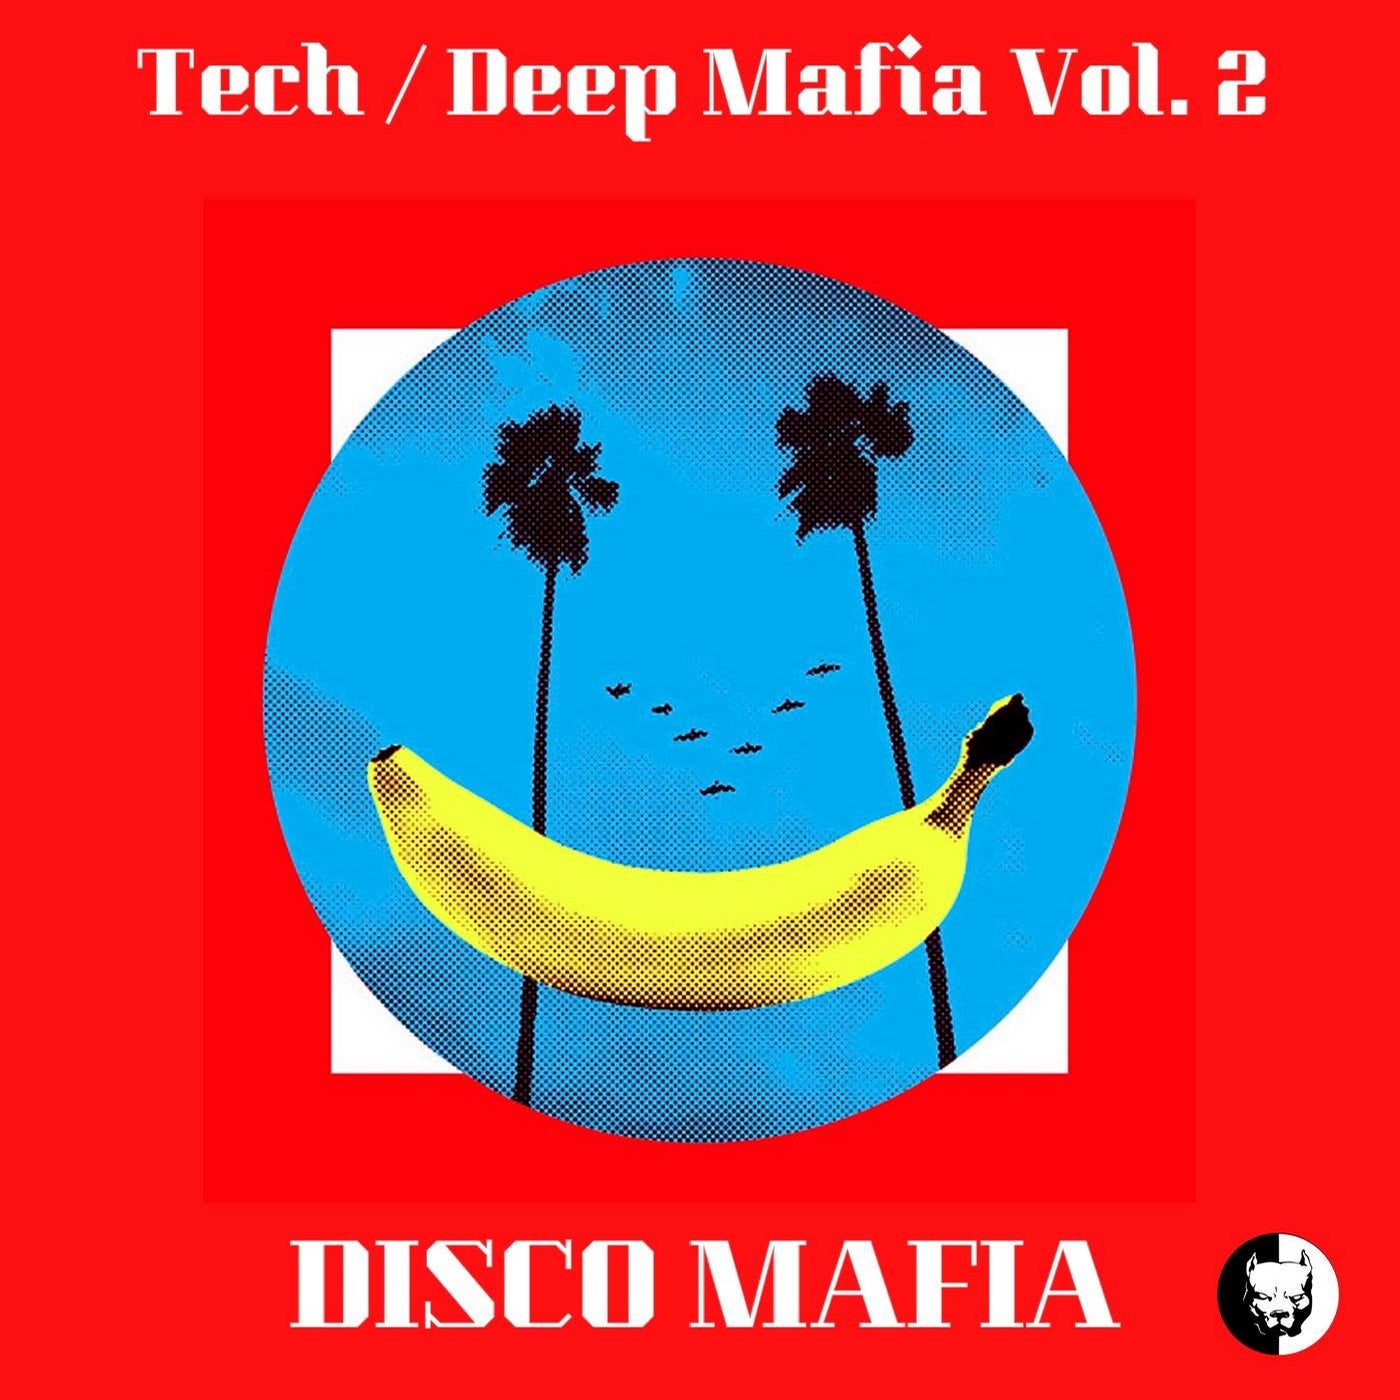 Tech / Deep Mafia Vol. 2